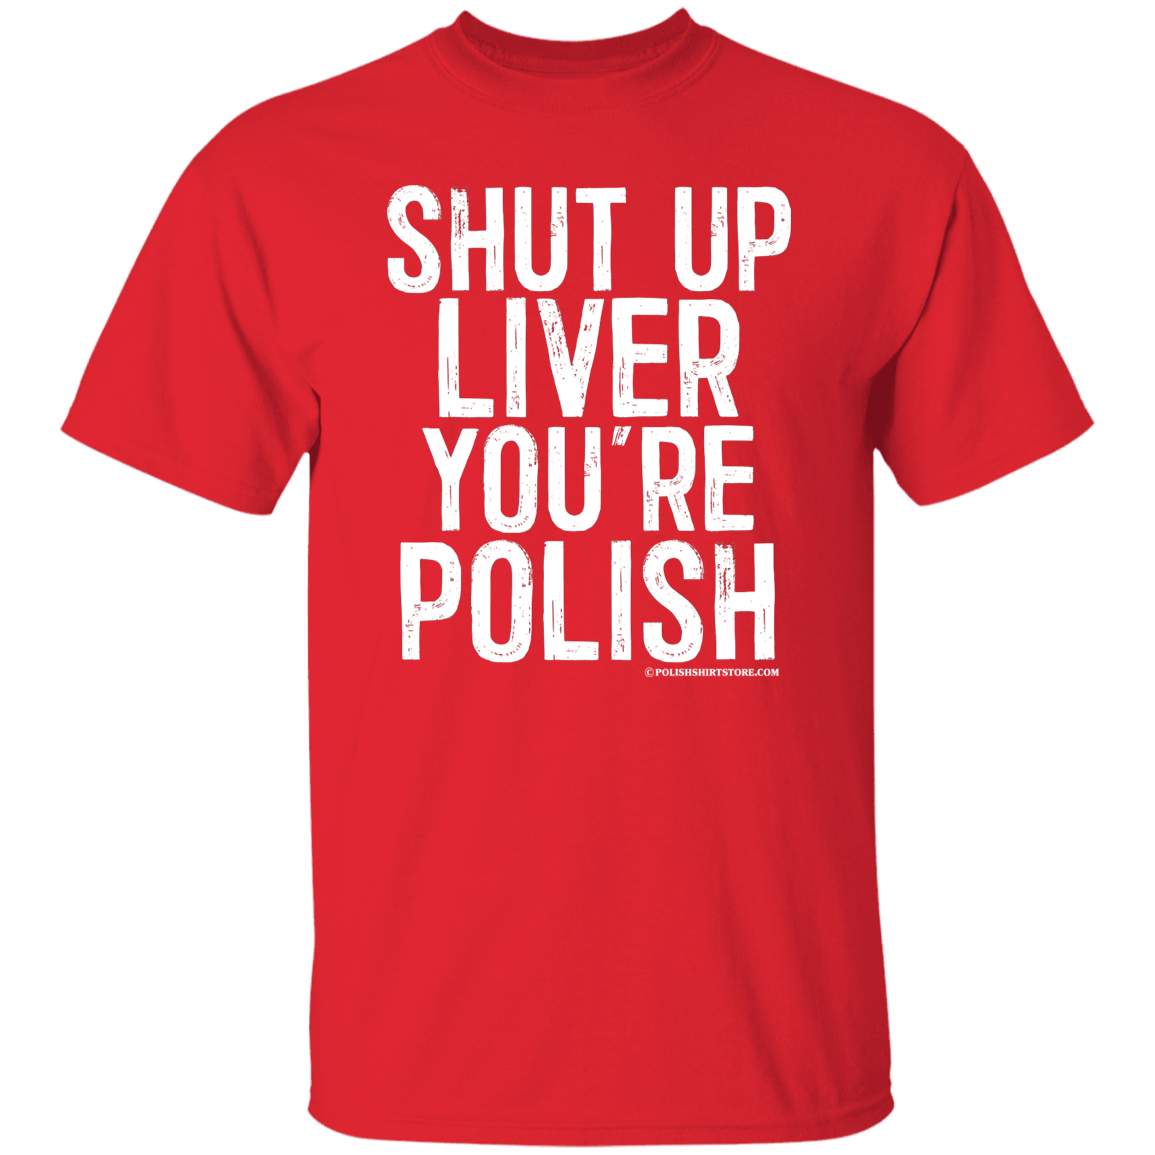 Shut Up Liver You're Polish Apparel CustomCat G500 5.3 oz. T-Shirt Red S